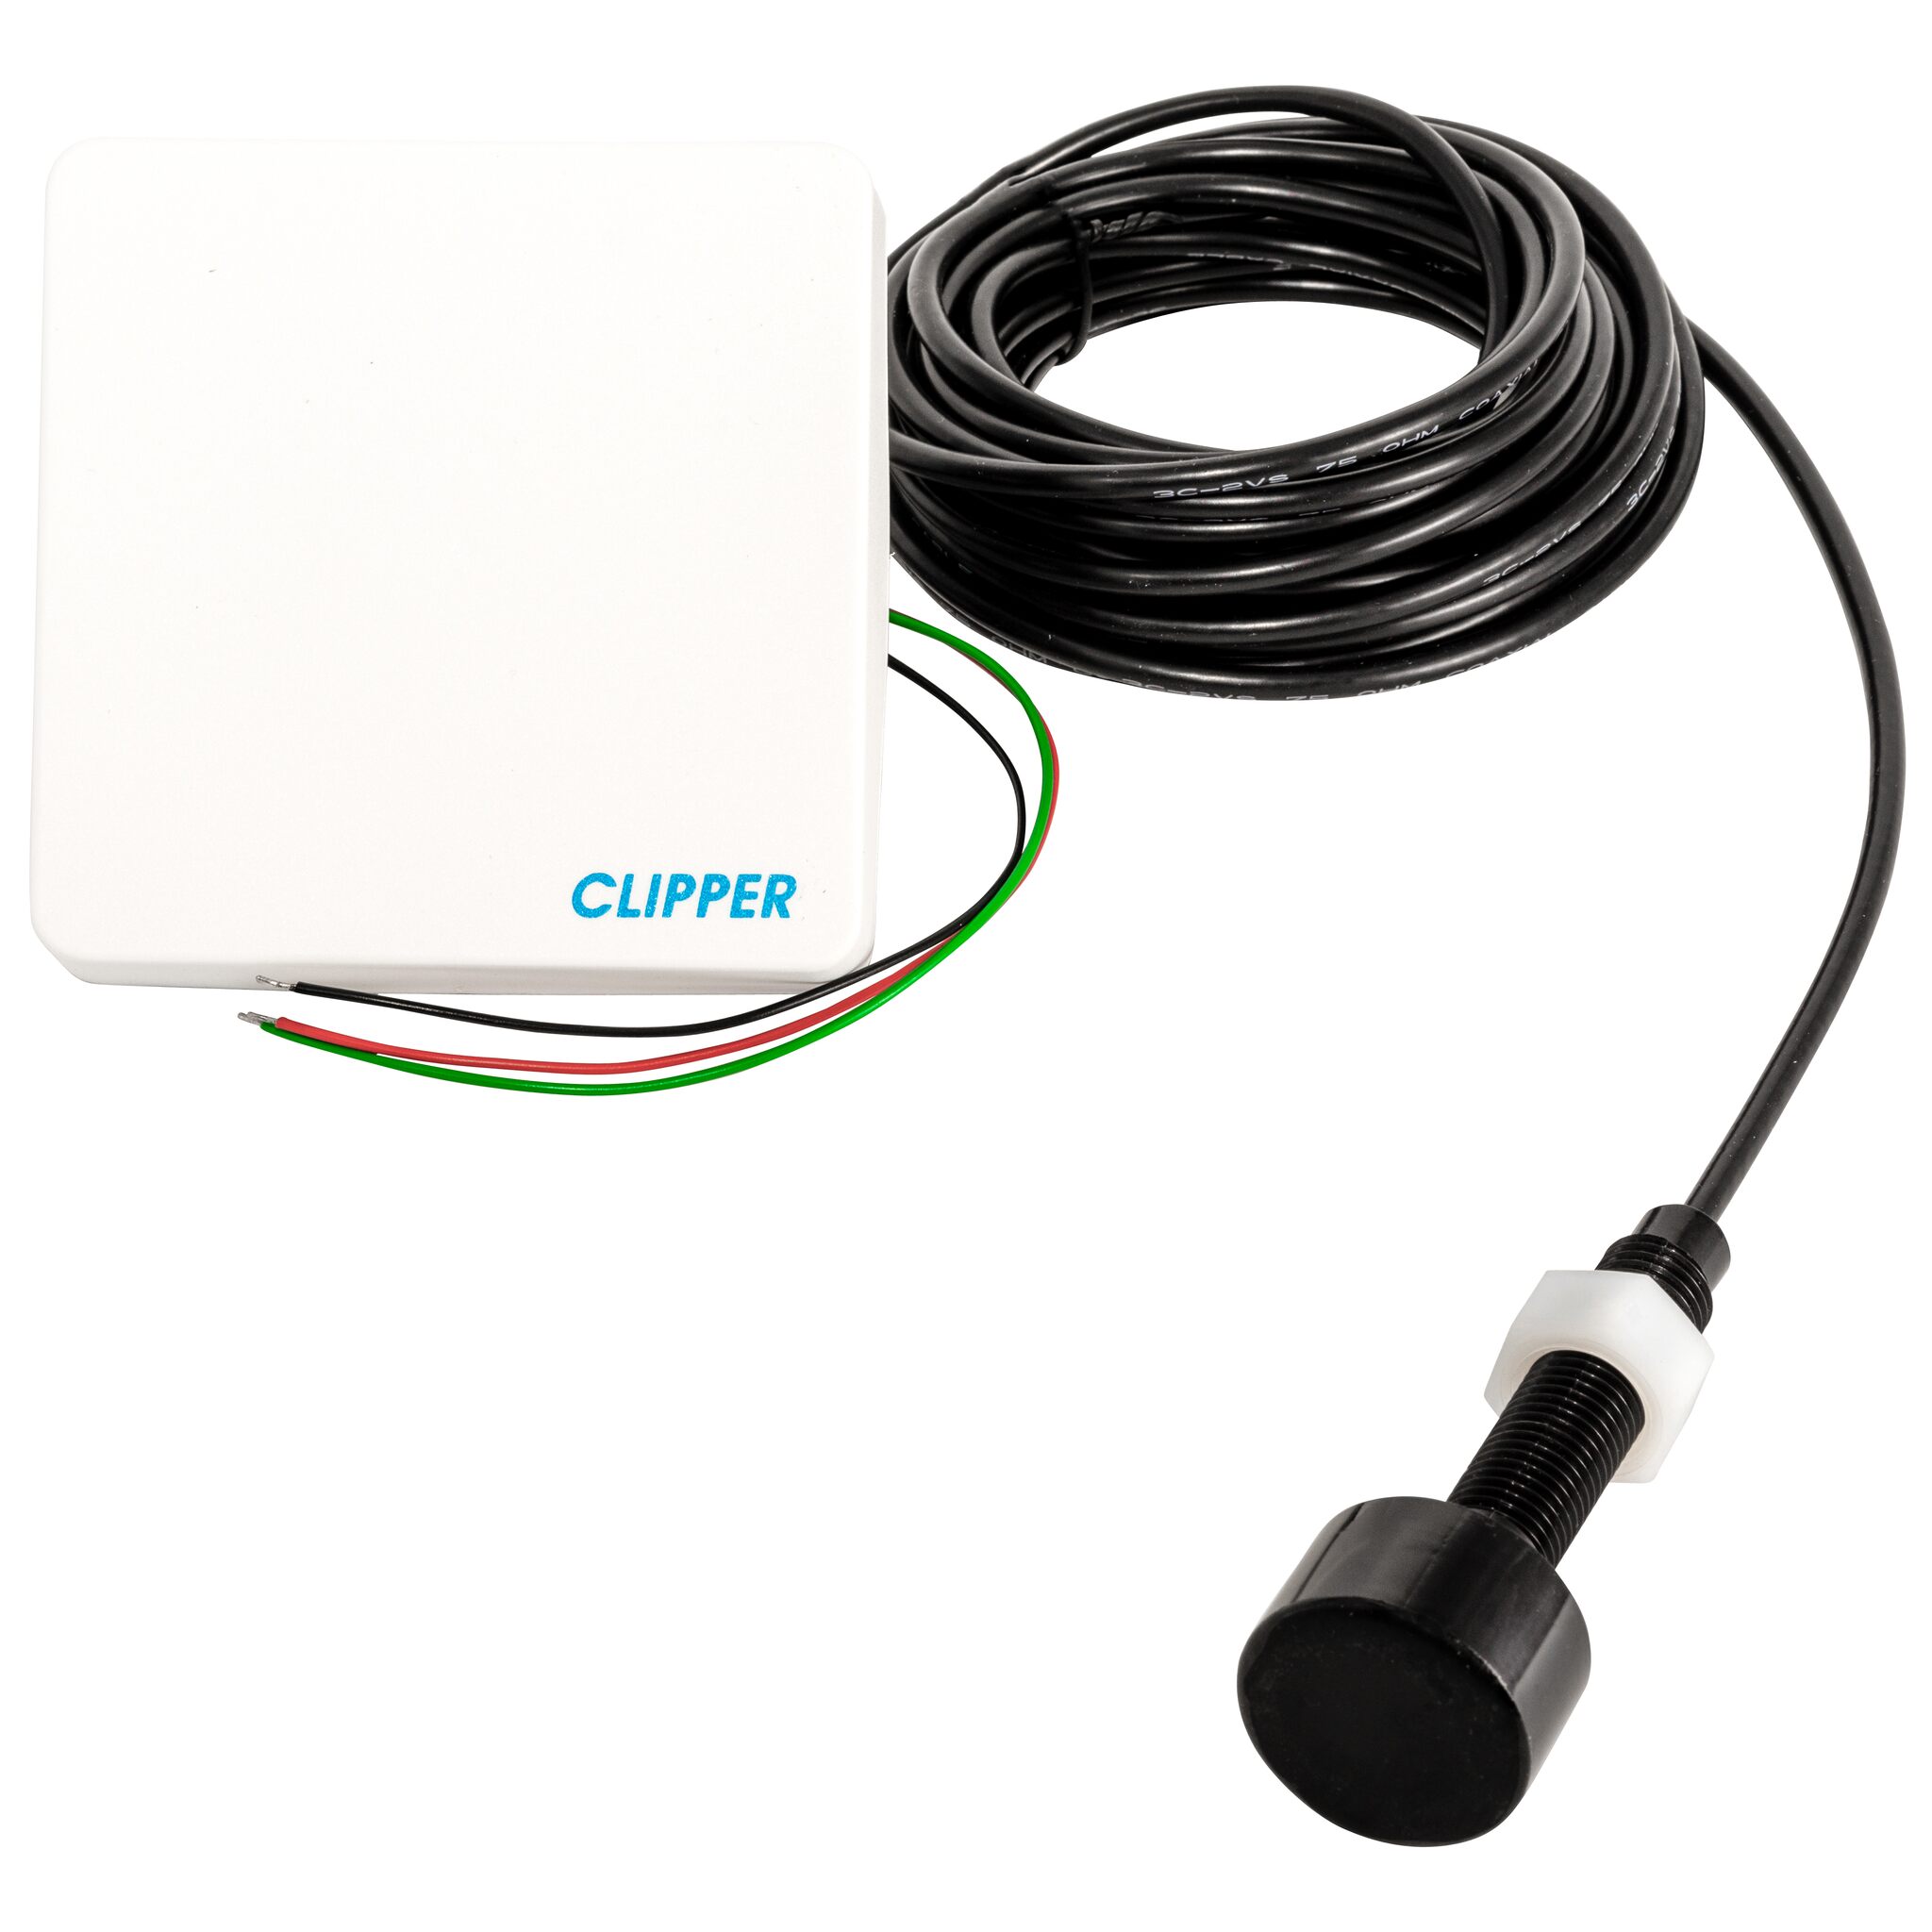 Clipper depth sounder